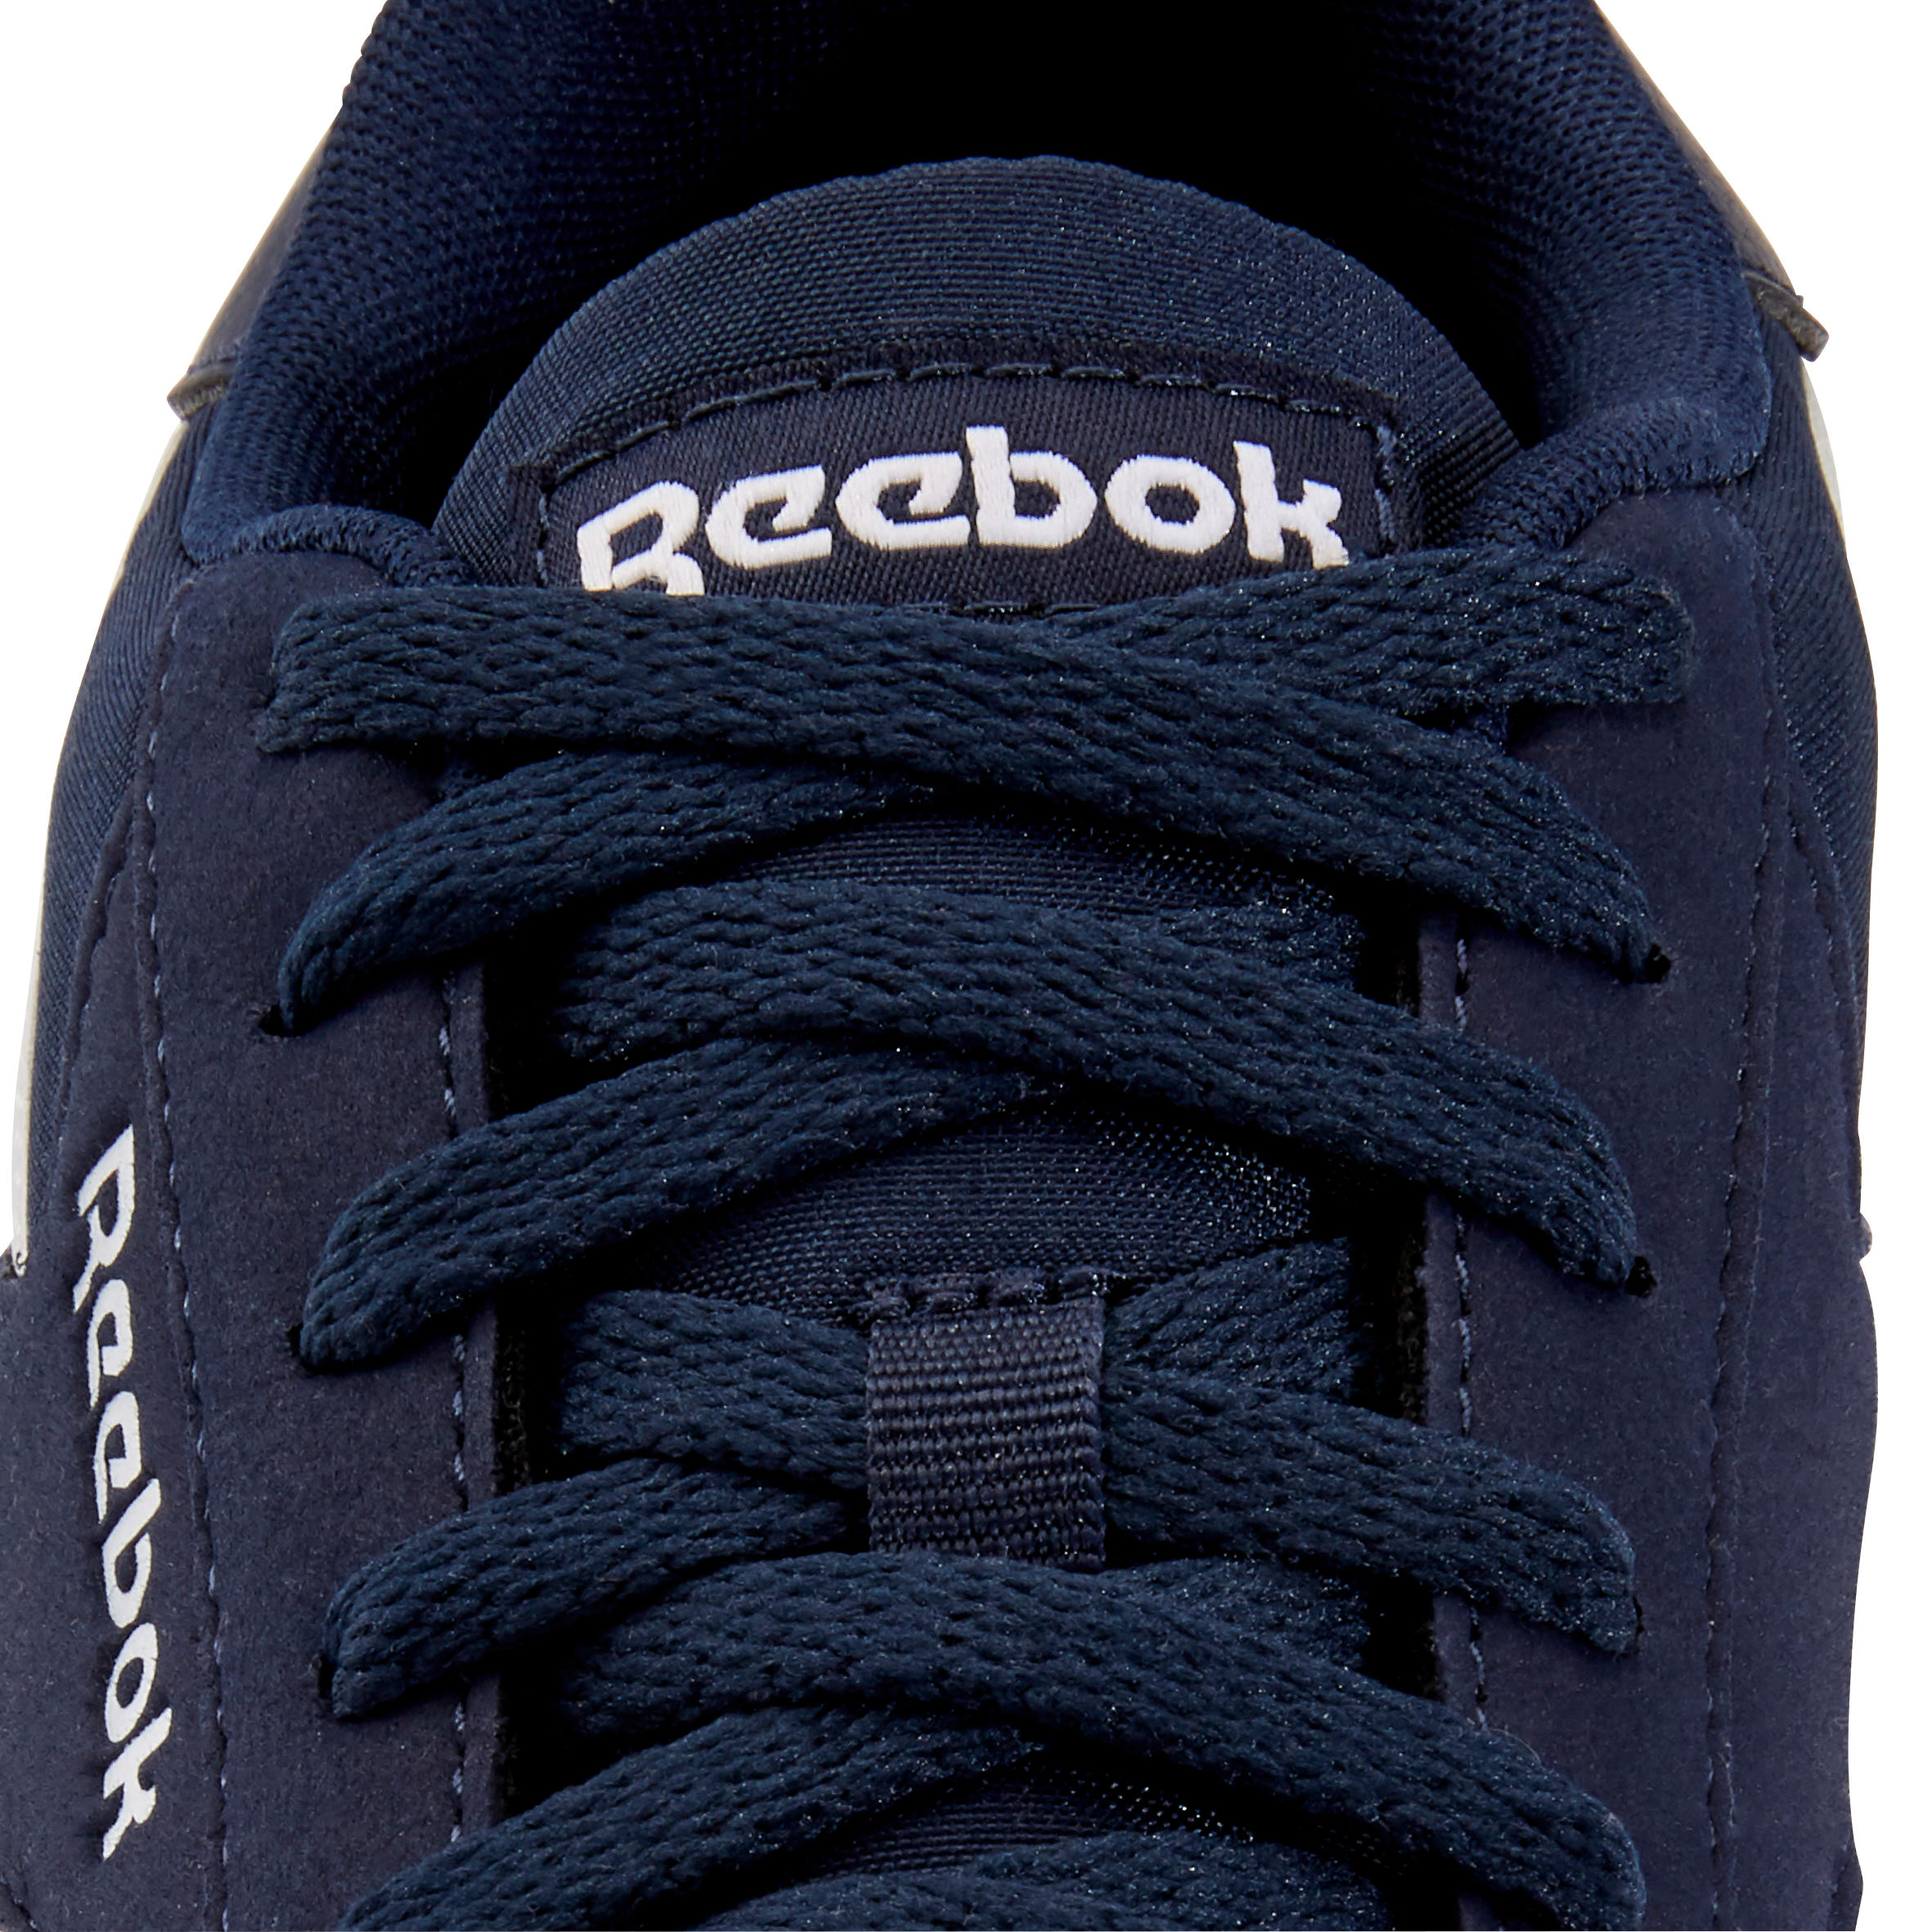 Men's Urban Walking Shoes Reebok Royal Classic - blue 8/8